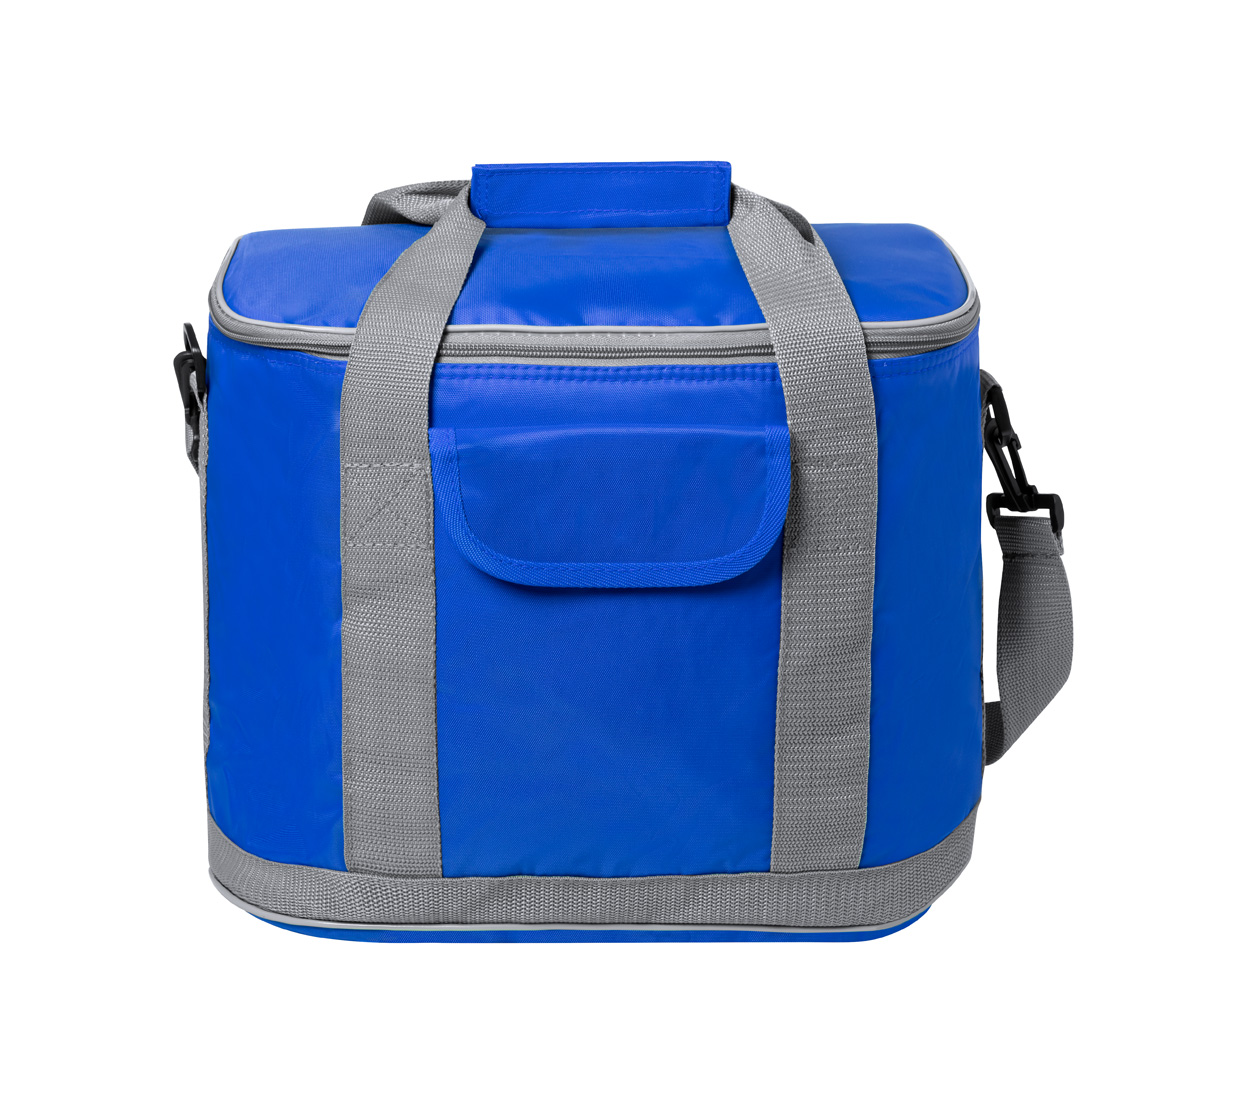 Sindy cooler bag - blue